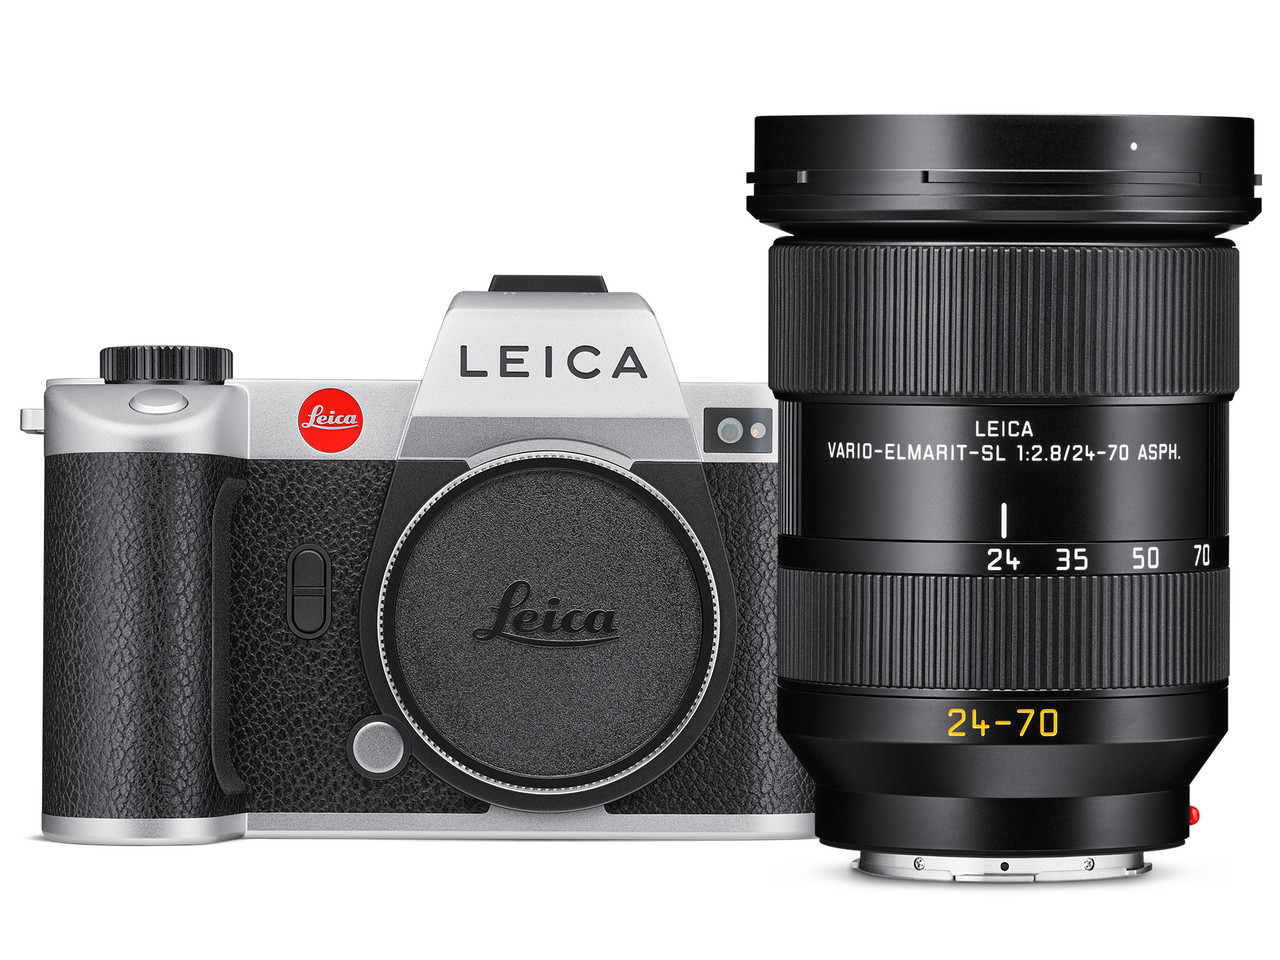 Leica SL2 Silver Bundle with Vario-Elmarit-SL 24-70 f/2.8 ASPH.